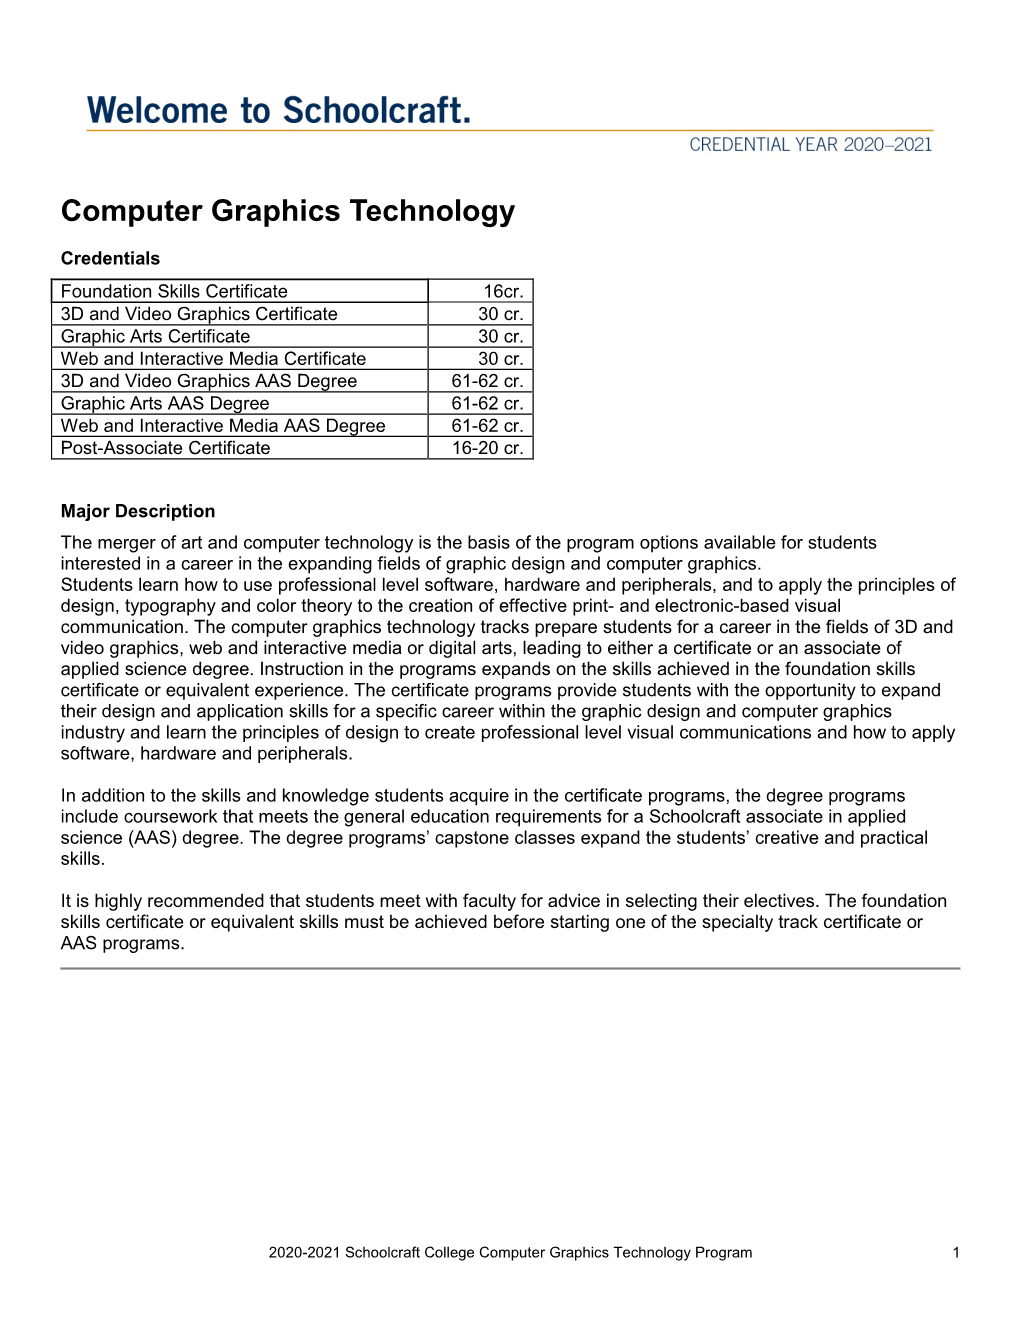 Computer Graphics Technology